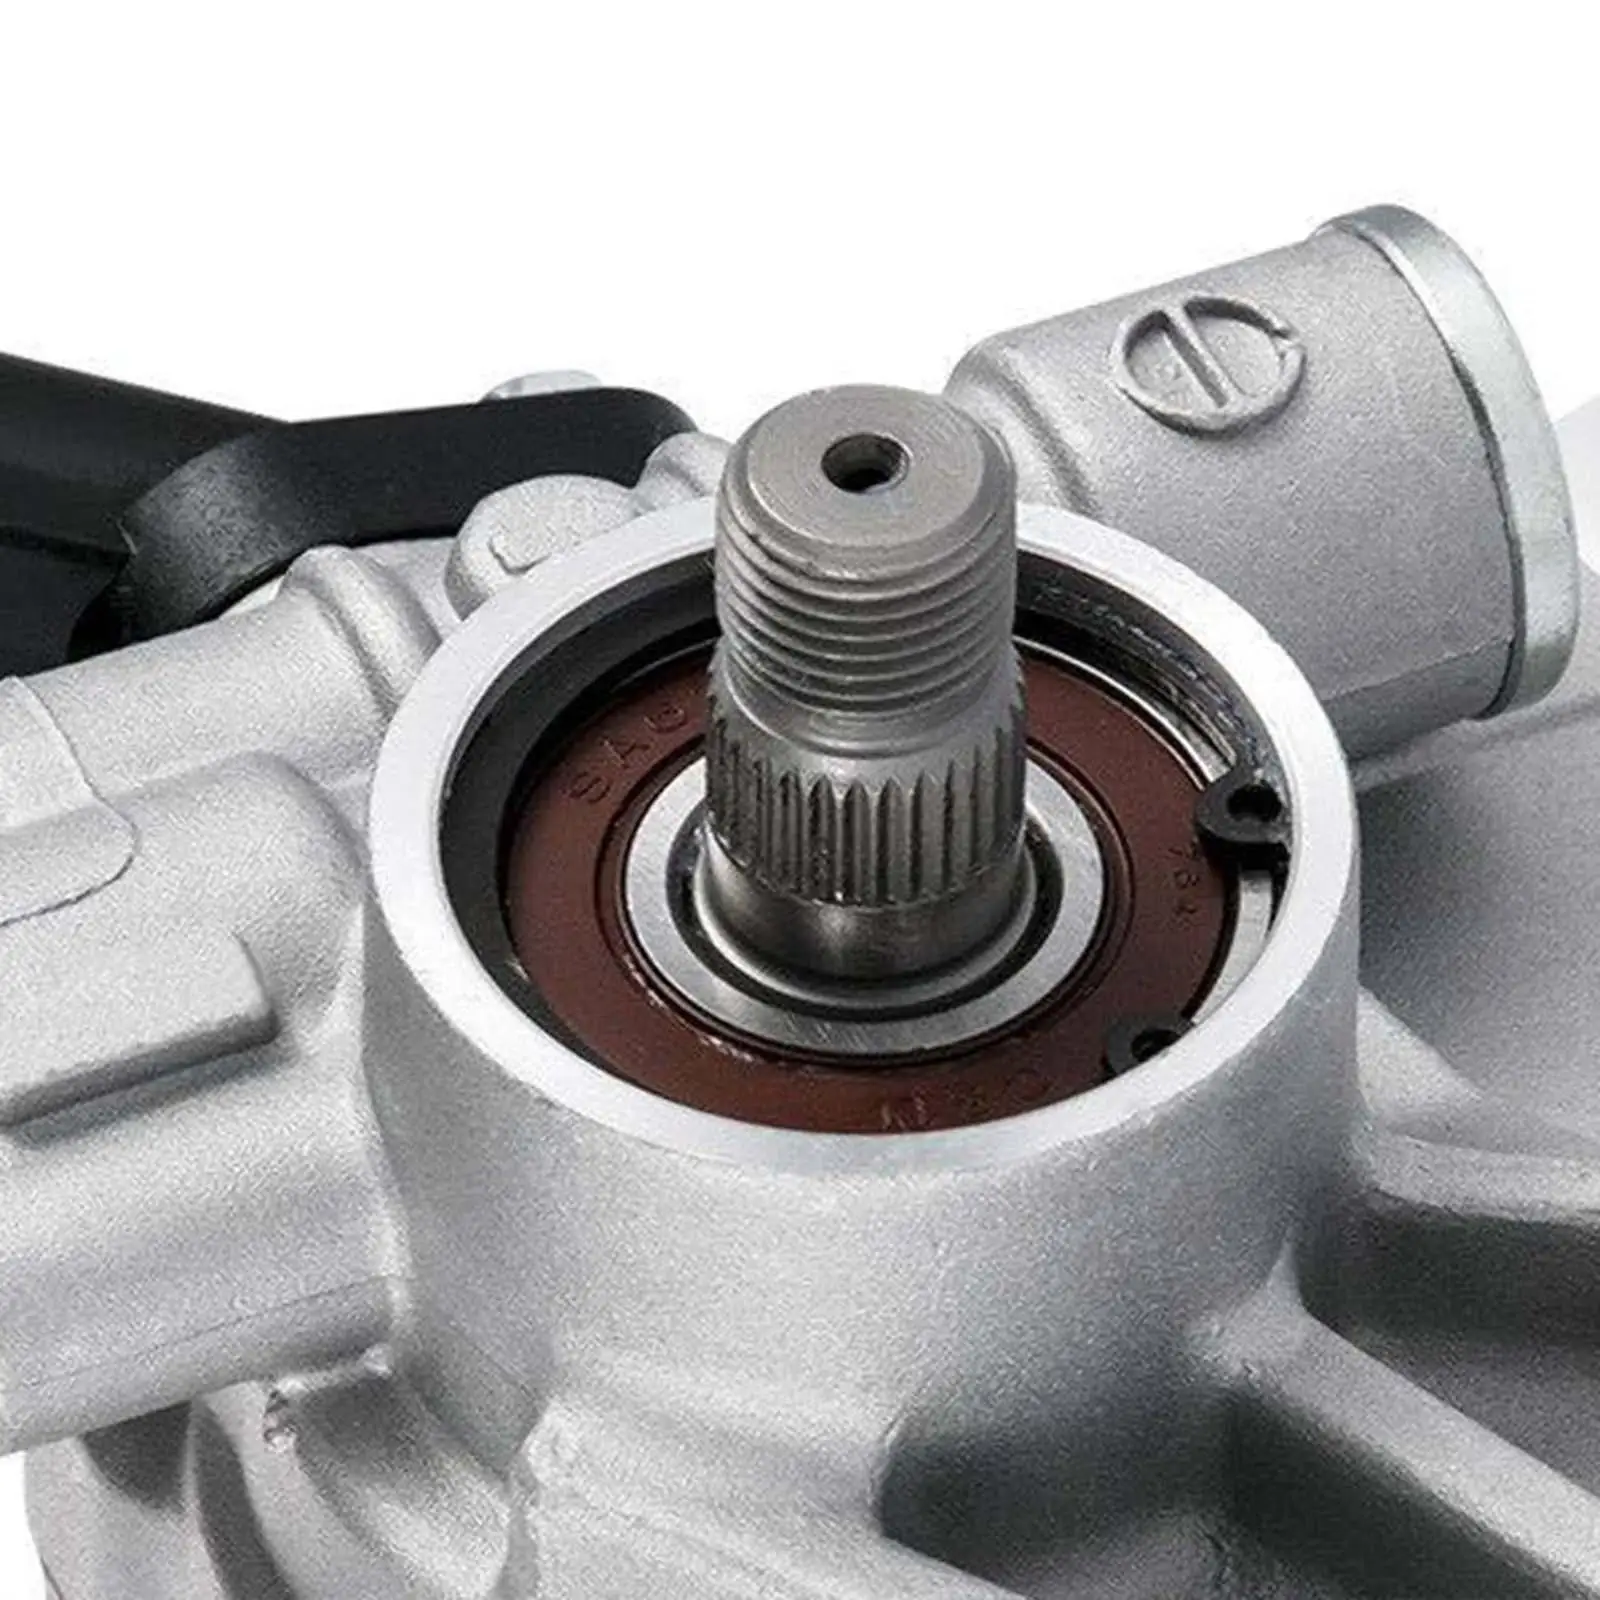 Power Steering Pump Power Assist Pump for Honda Pilot Repair Part Easy Installation Professional